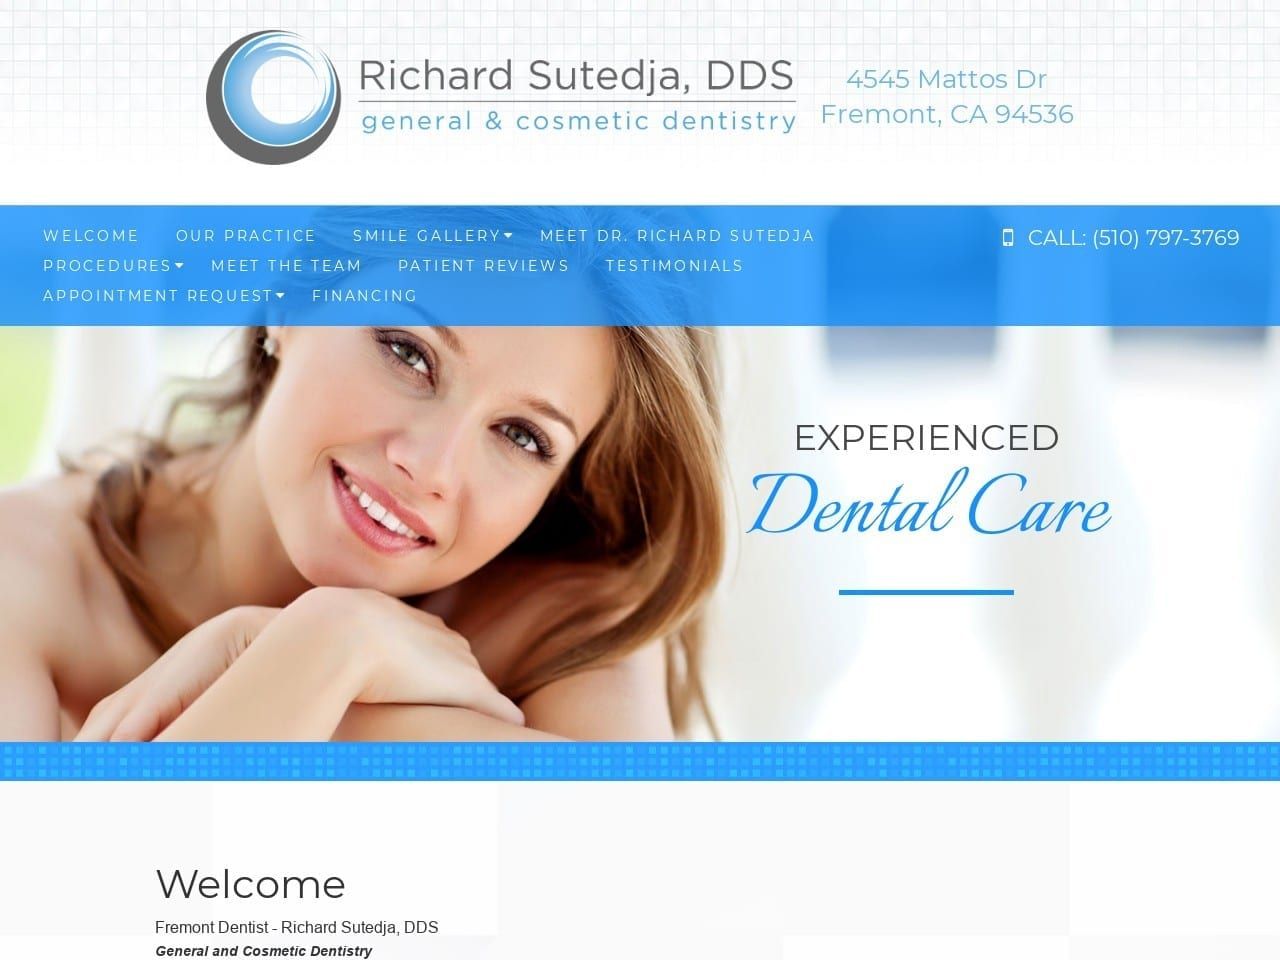 Richard Sutedja DDS Website Screenshot from fremontcaringdentist.com